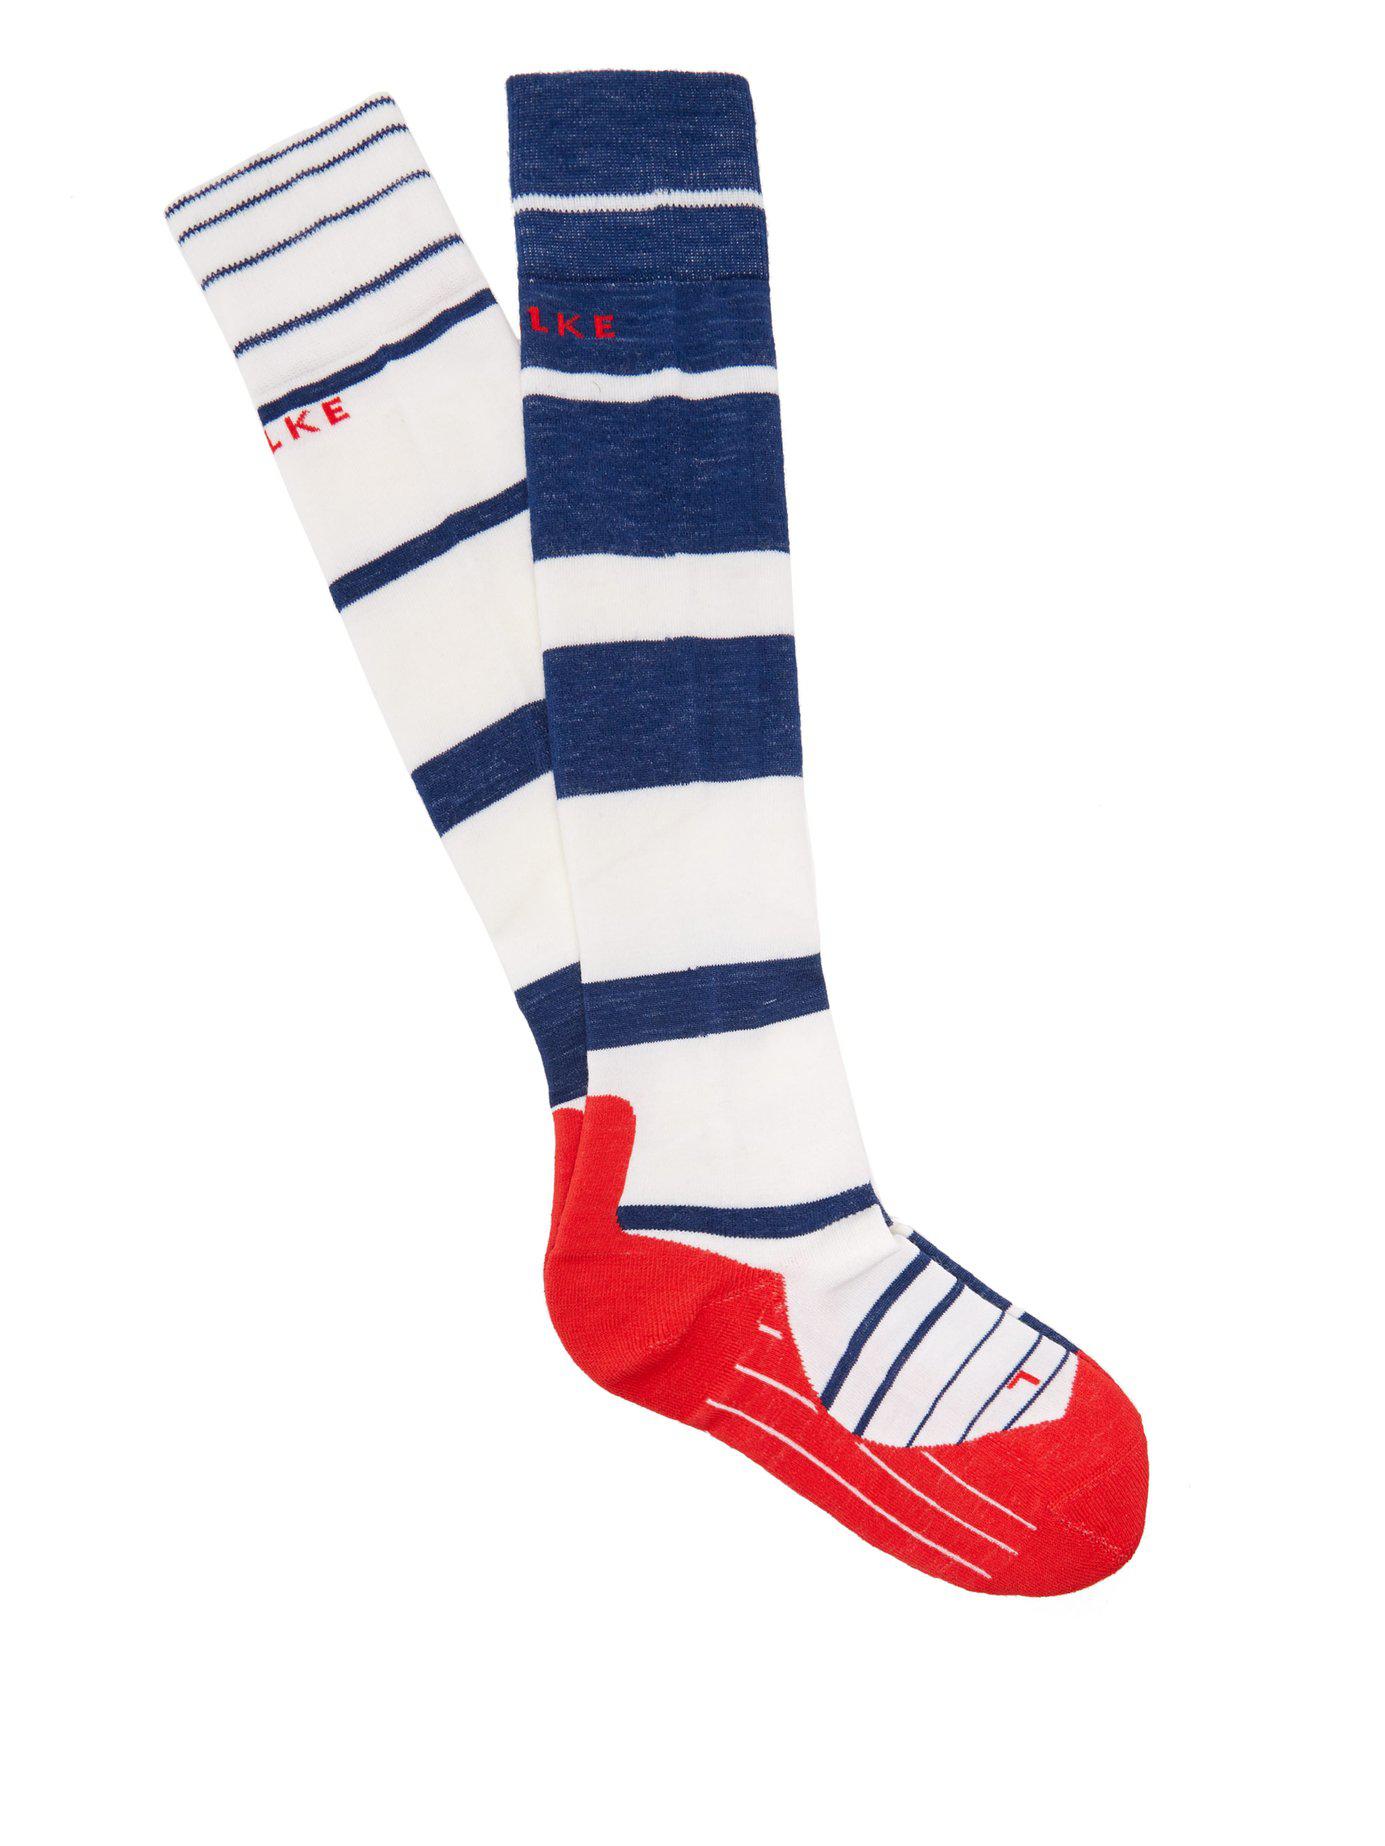 Falke Sk4 Knee-high Cushioned Ski Socks in Blue Stripe (Blue) - Lyst